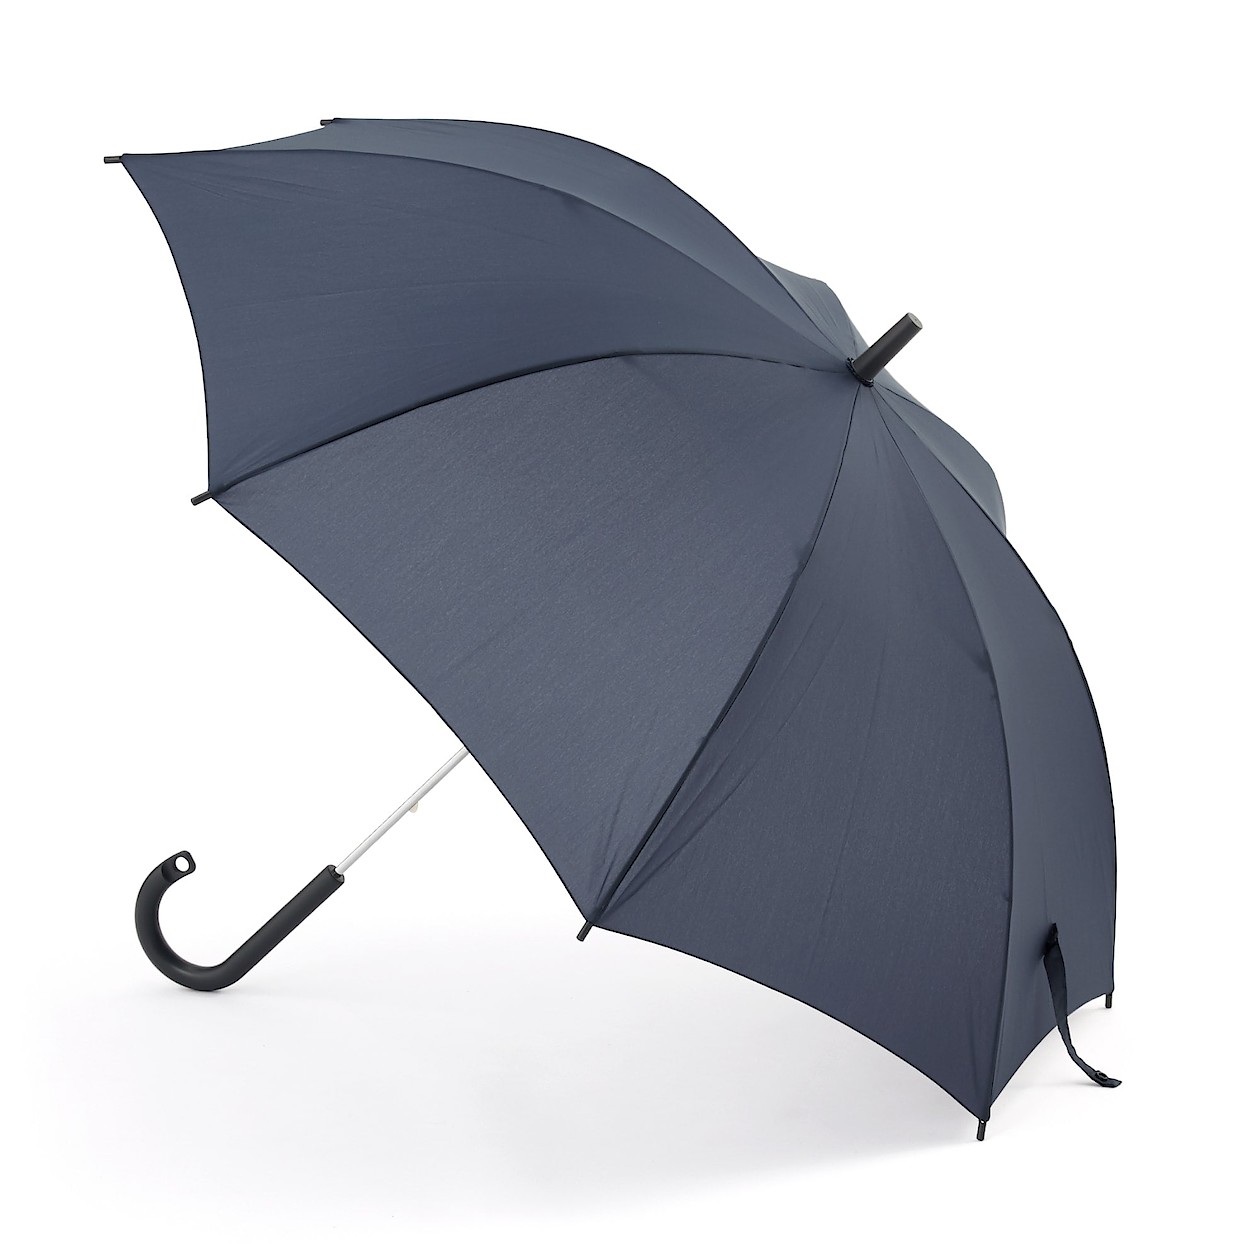 NAVY(나만의 표시가 가능한 · 우산)